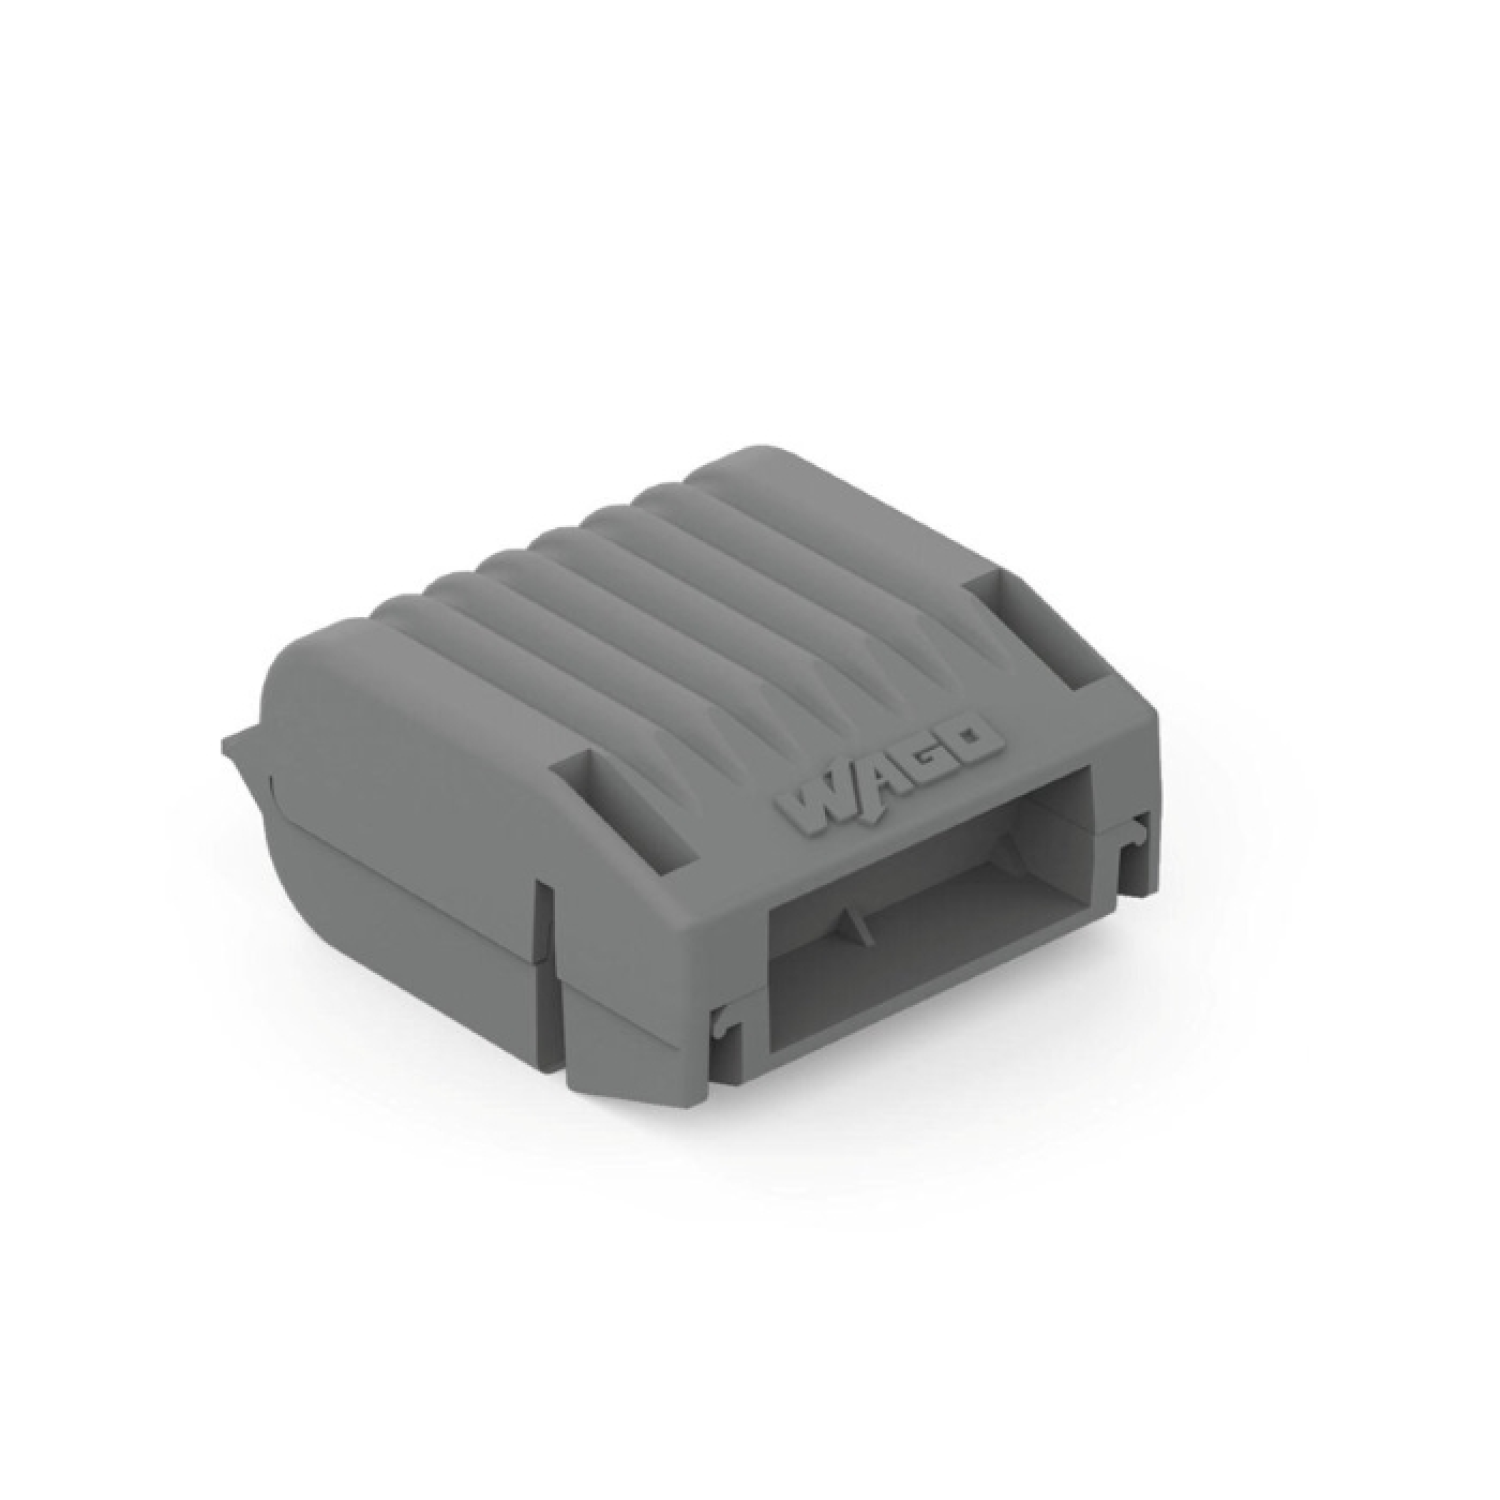 WAGO Gelbox pour pinces à souder -WAGO Gelbox pour pinces à souder max. 4mm² - IPX8 - taille 1 - 4 pcs.-image